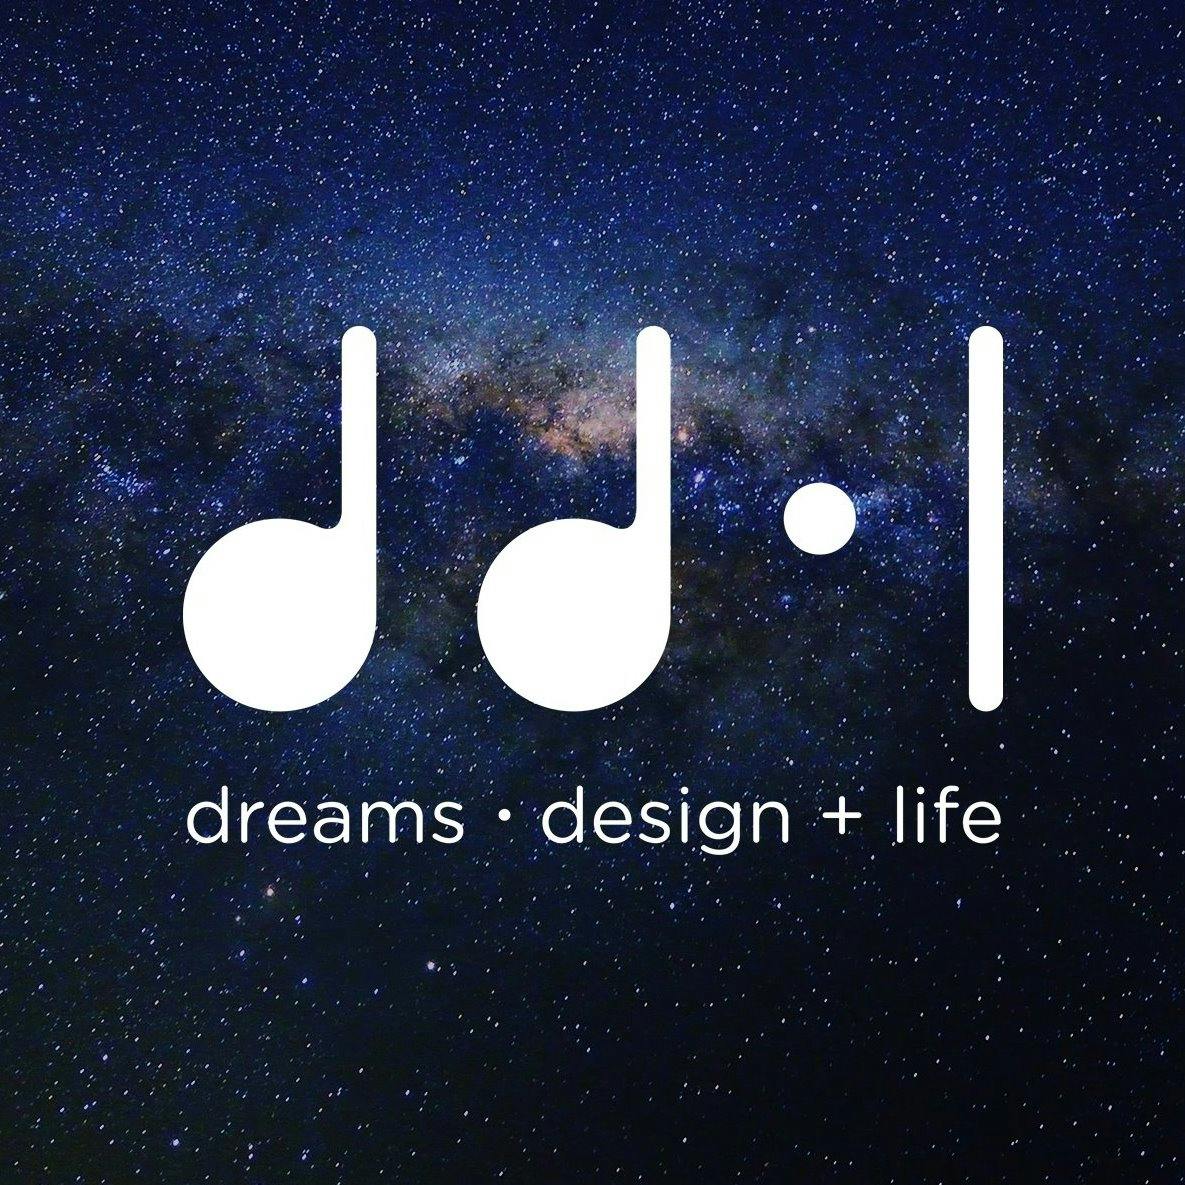 dreams • design + life